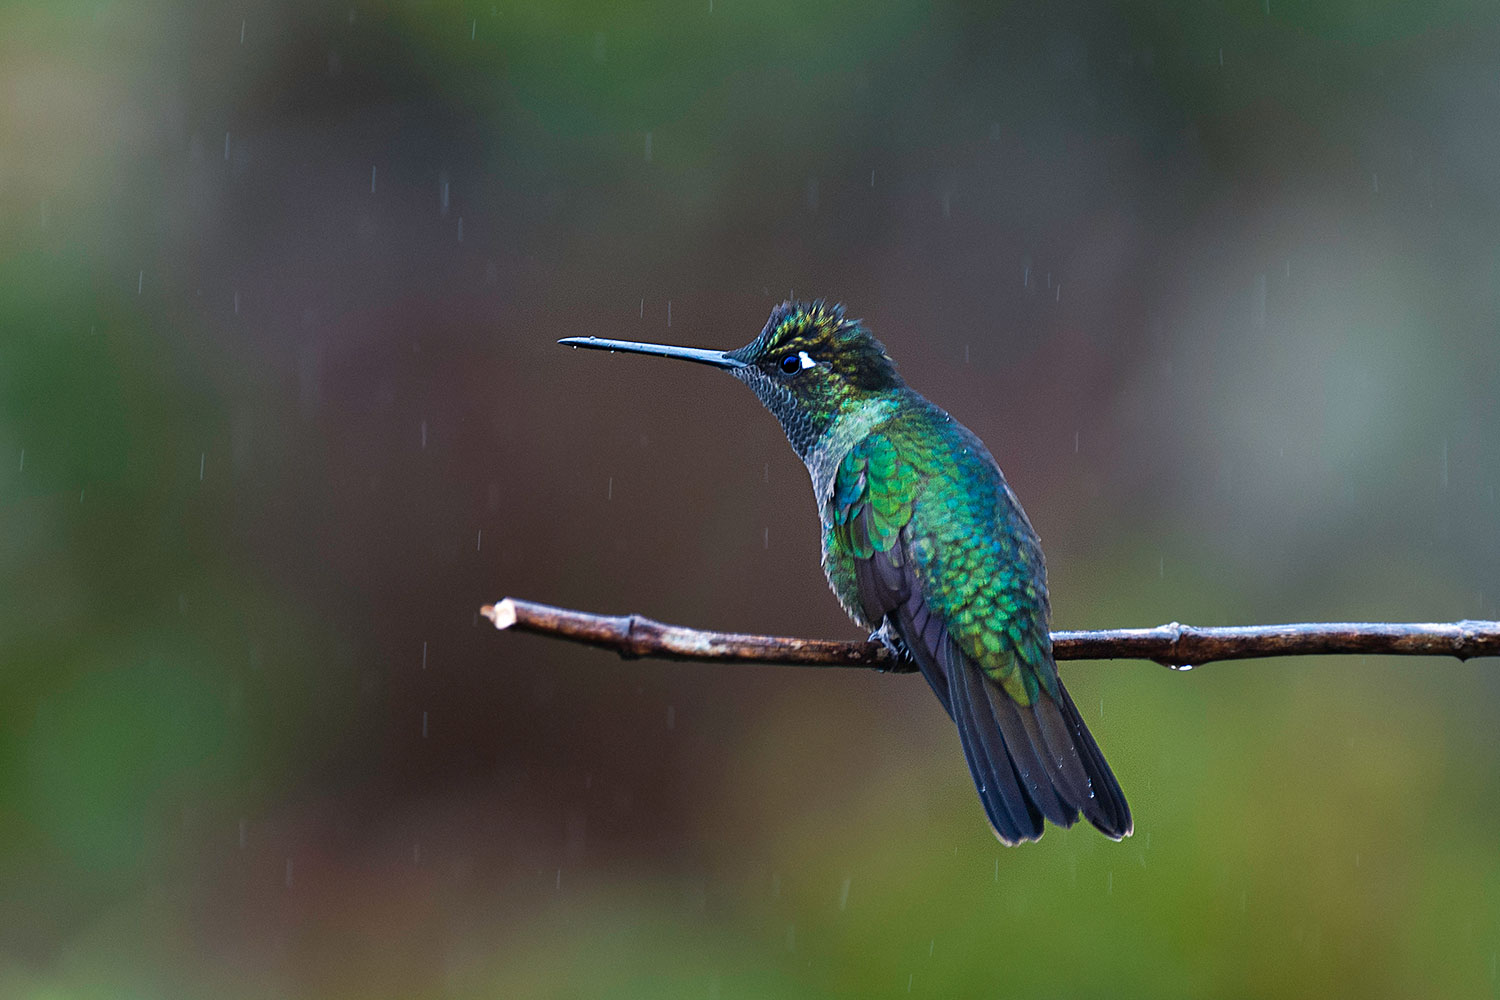 Magnificent hummingbird in the rain...